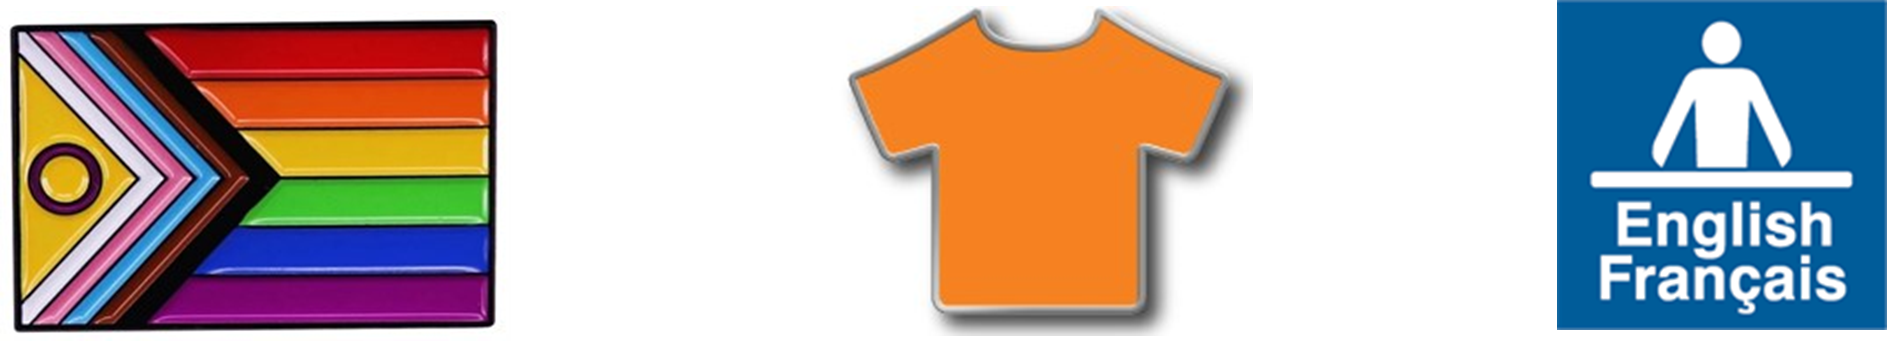 three icons: a rainbow flag, an orange shirt, a bilingual service sign